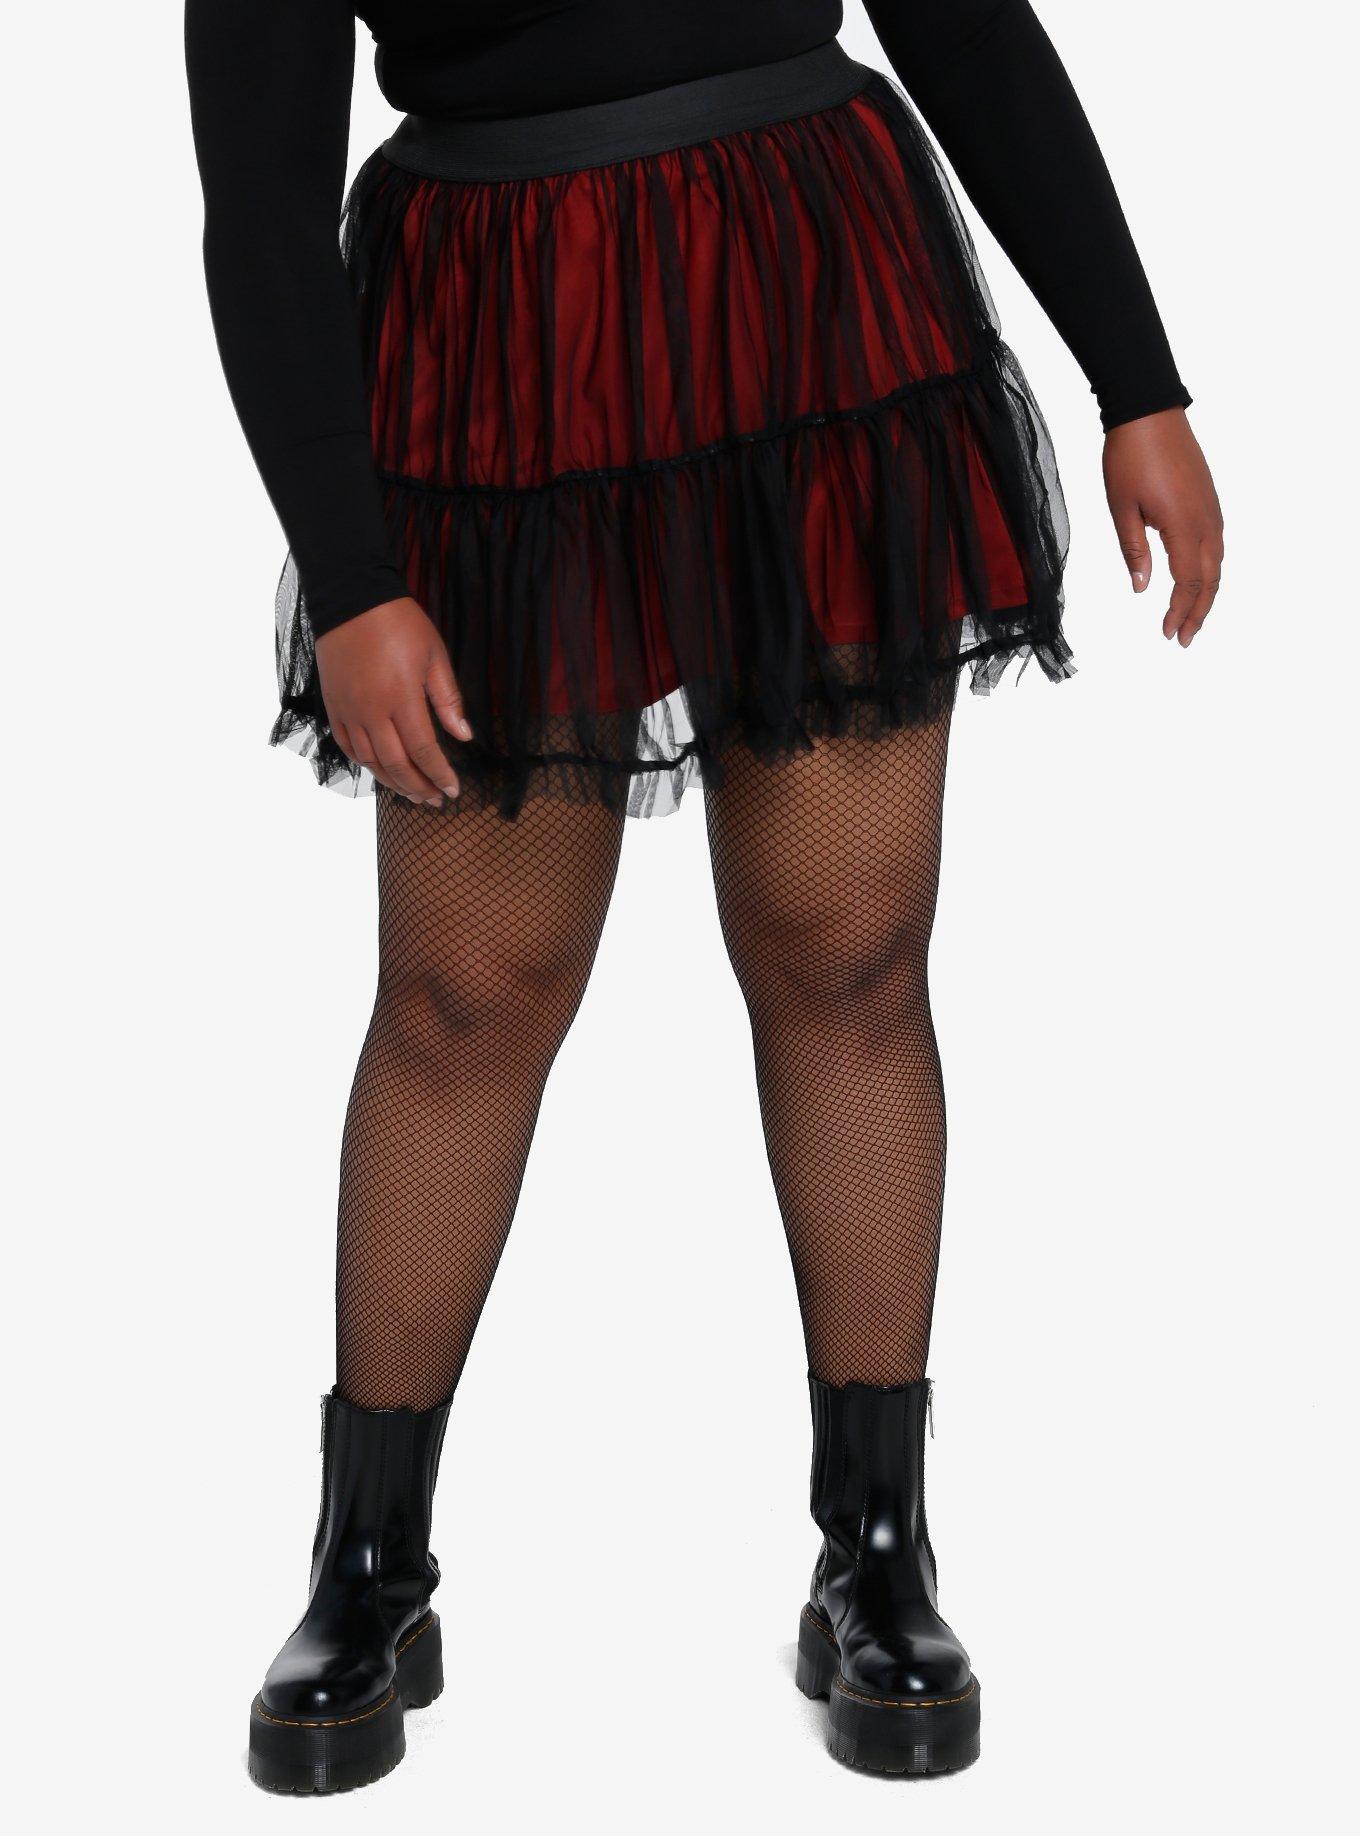 Social Collision Red & Black Mesh Tutu Skirt Plus Size, BLACK, hi-res